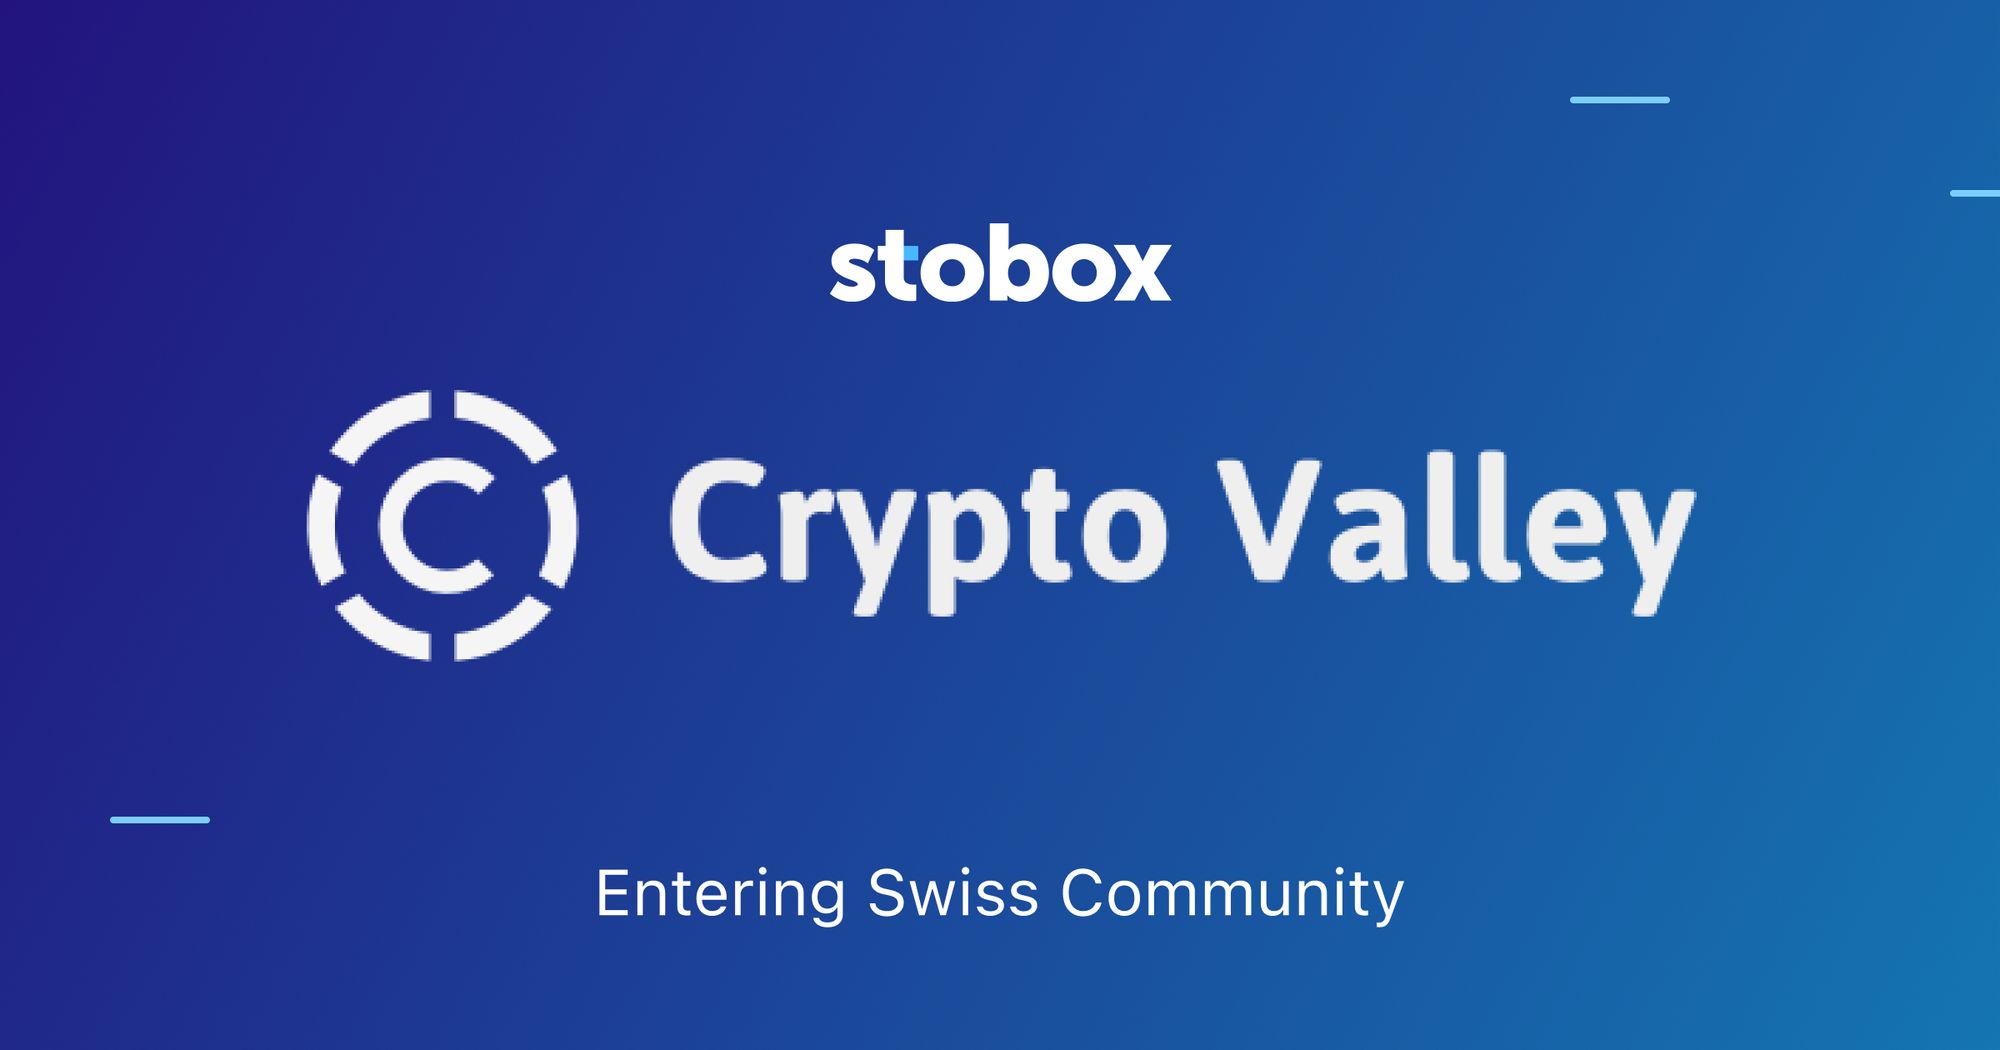 Stobox joins the Crypto Valley Association, leading Switzerland's crypto ecosystem.